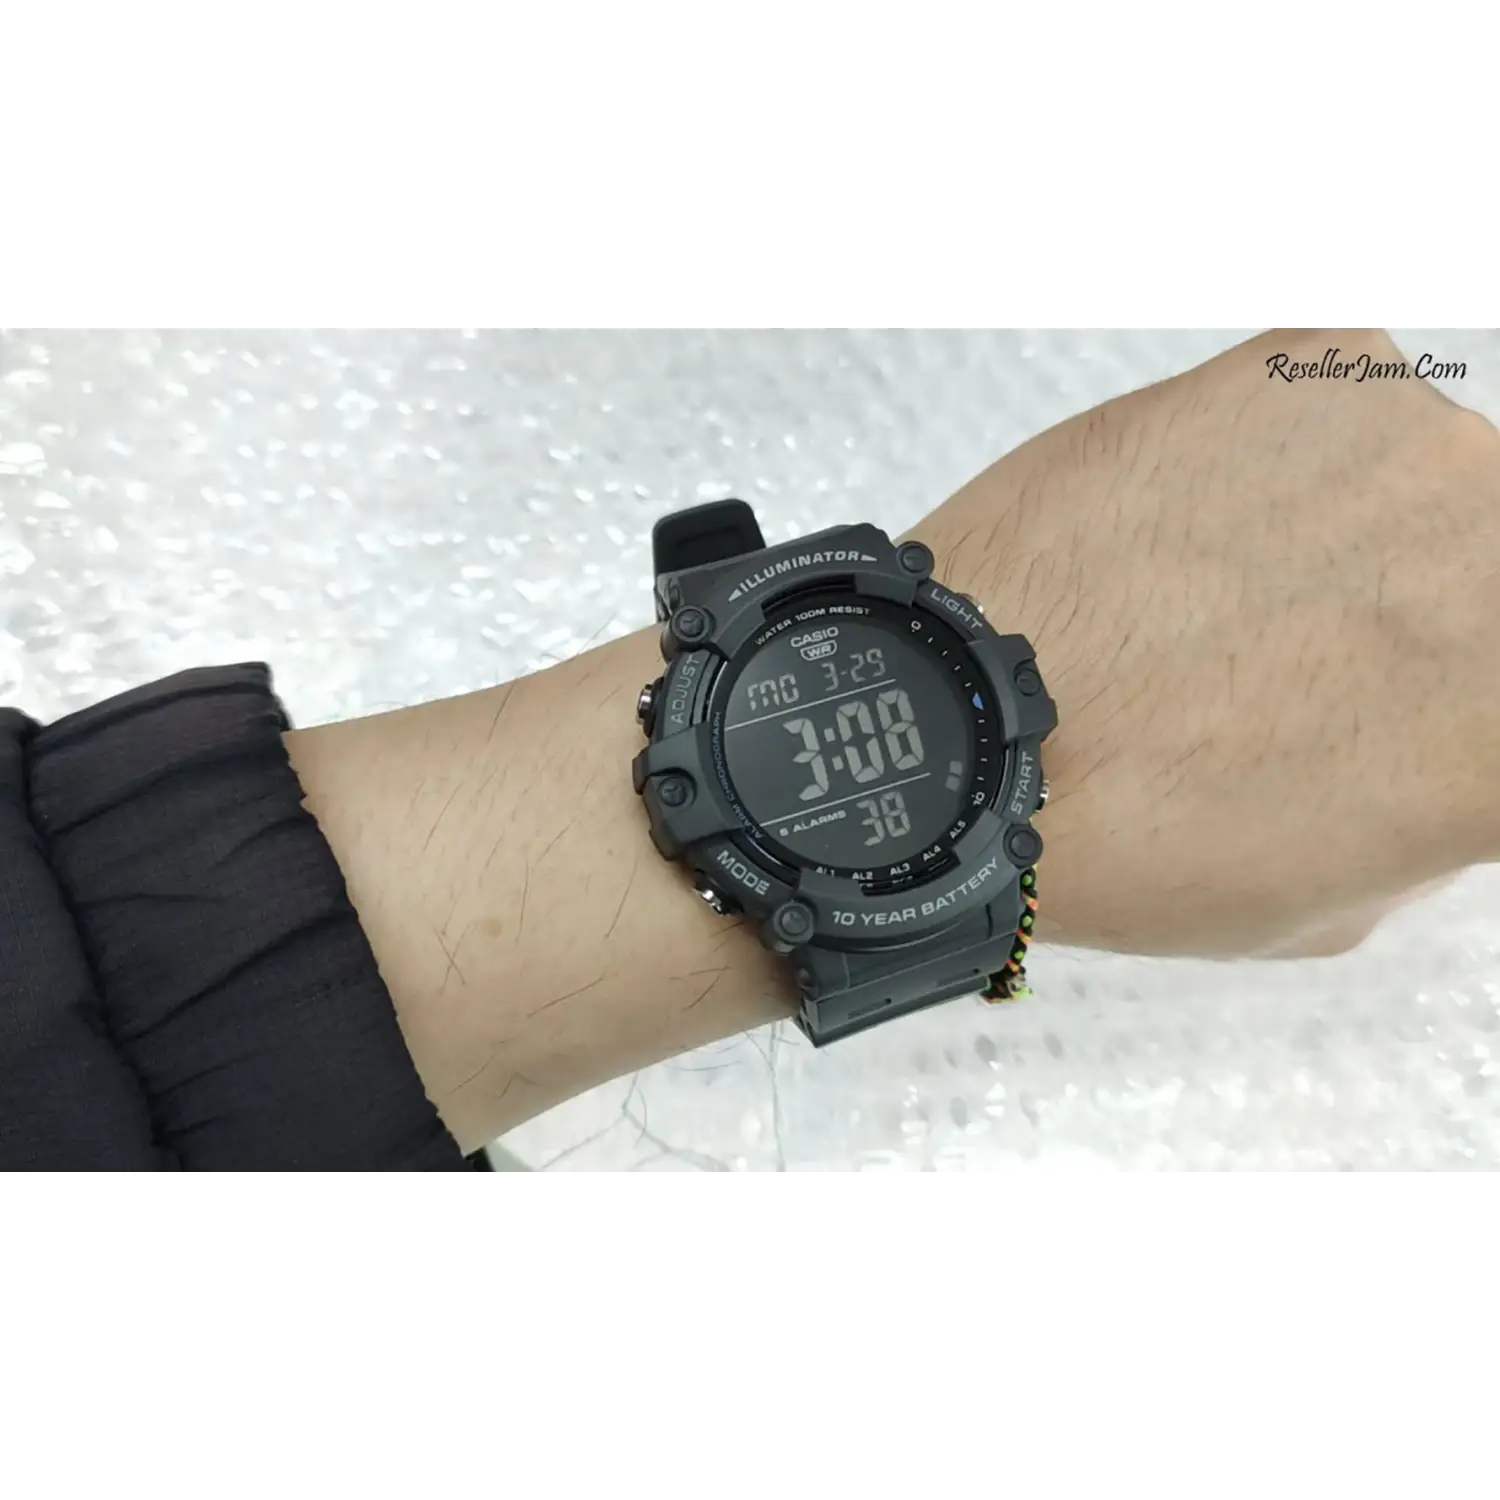 Casio Men’s Digital Quartz Stopwatch 100m Black Resin Watch